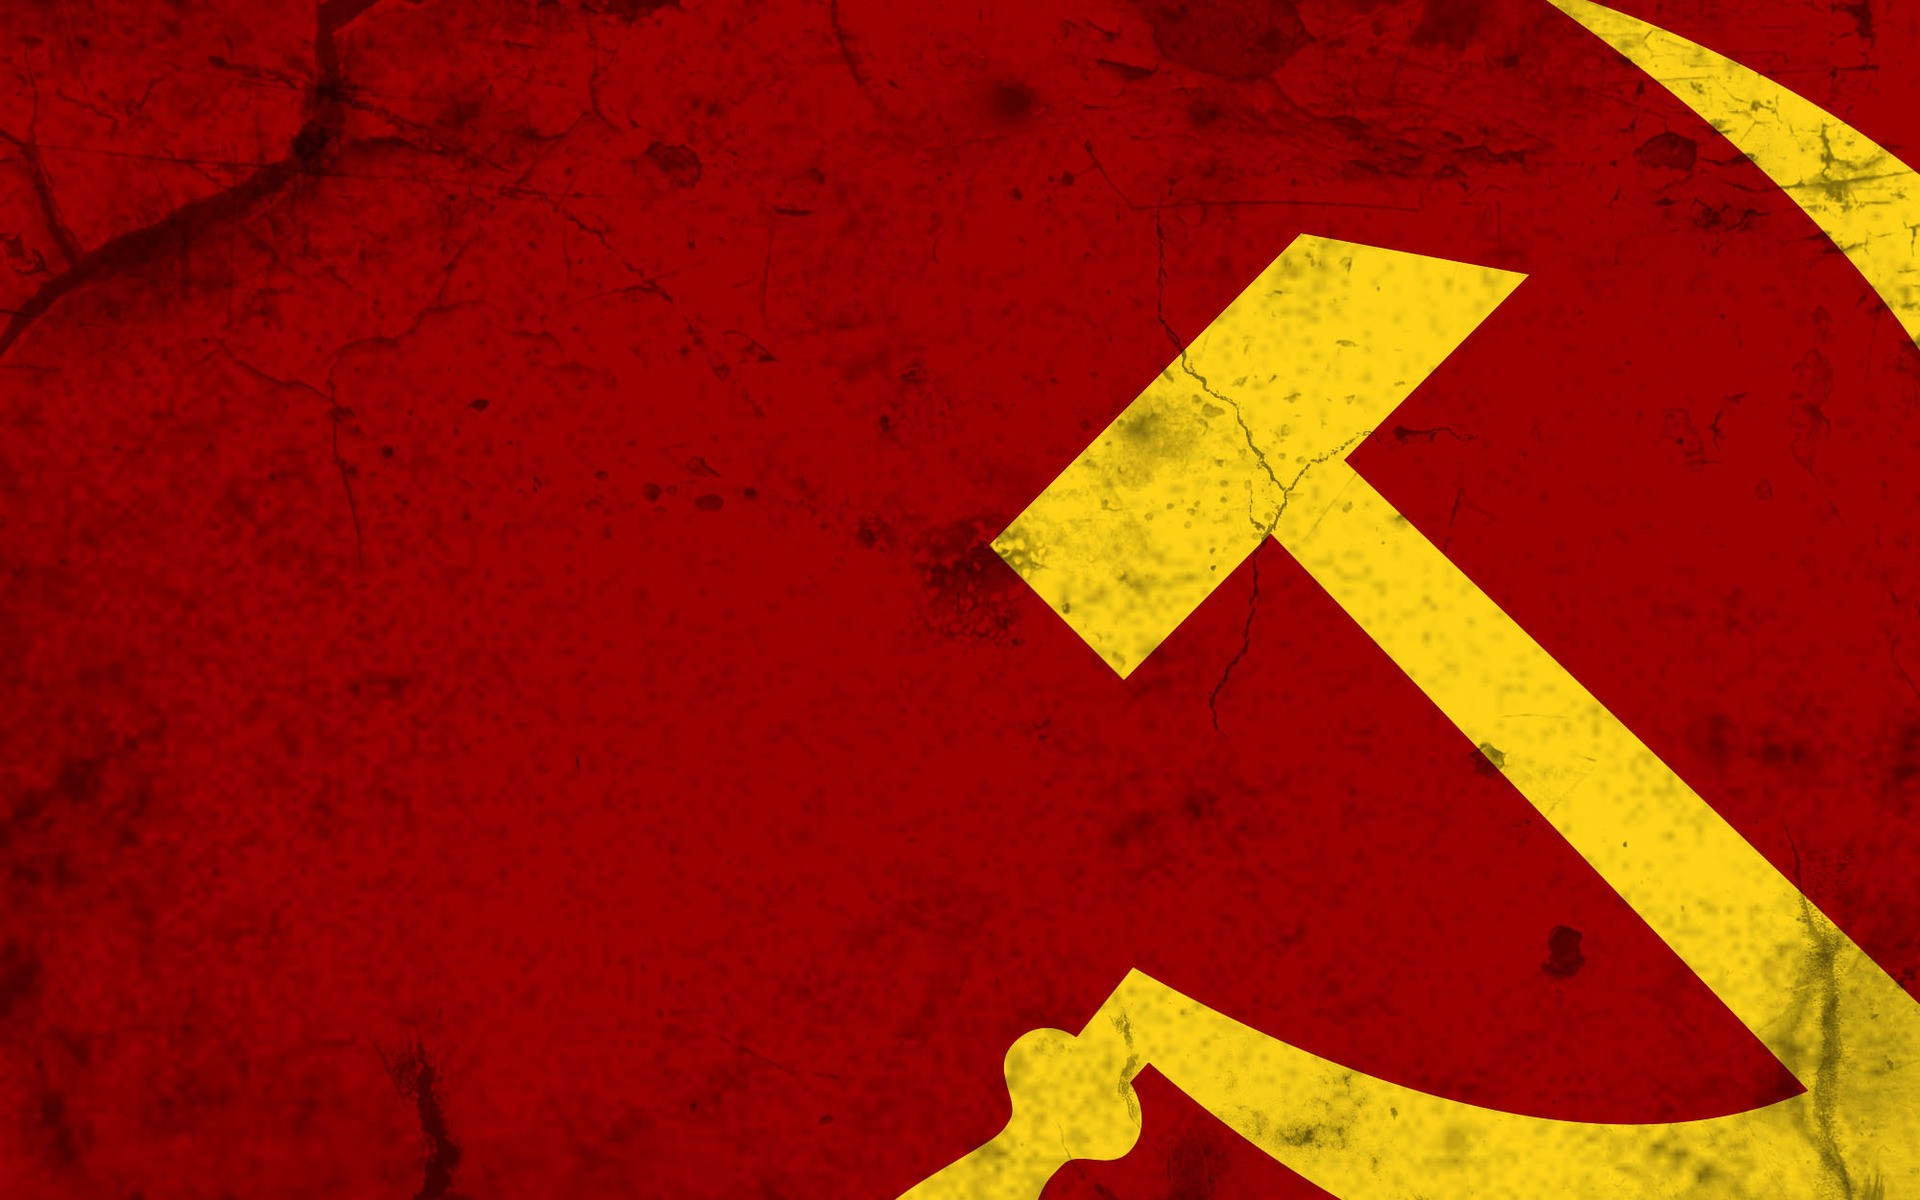 Ussr Sickle Soviet Russia Union Wallpaper Background